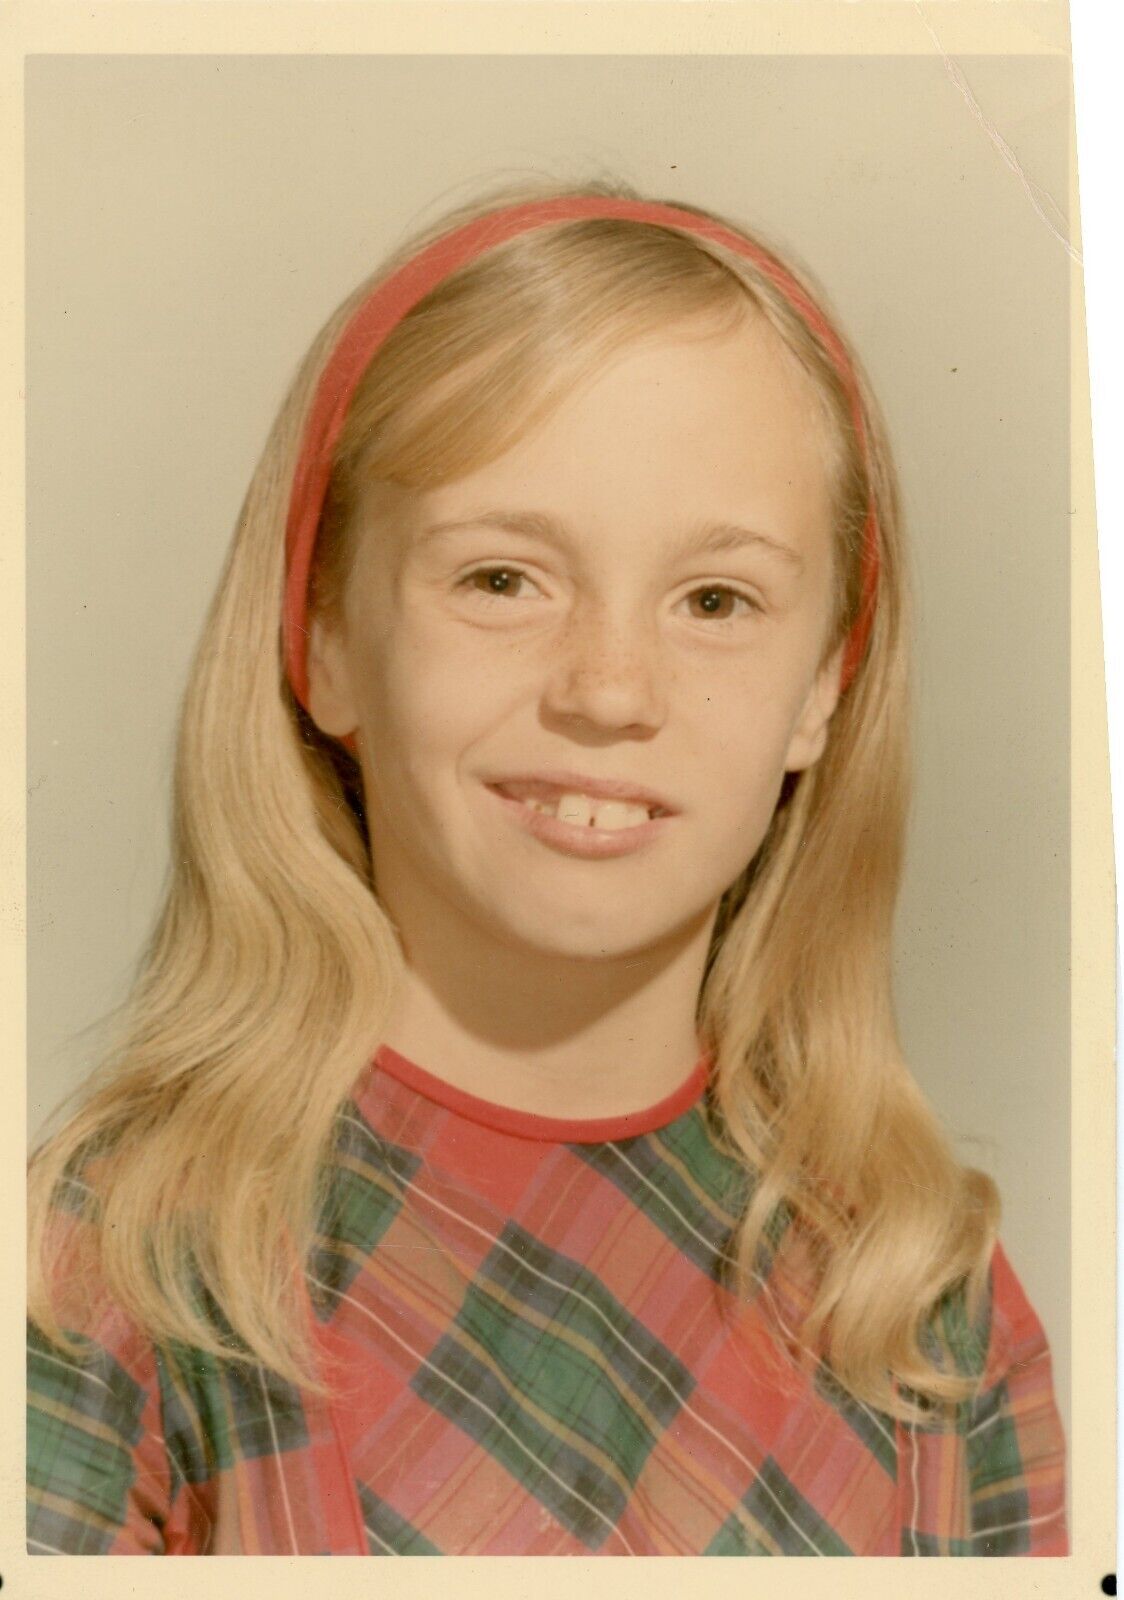 VTG Photo Pretty Girl Long Blonde Hair Elementary School Portrait